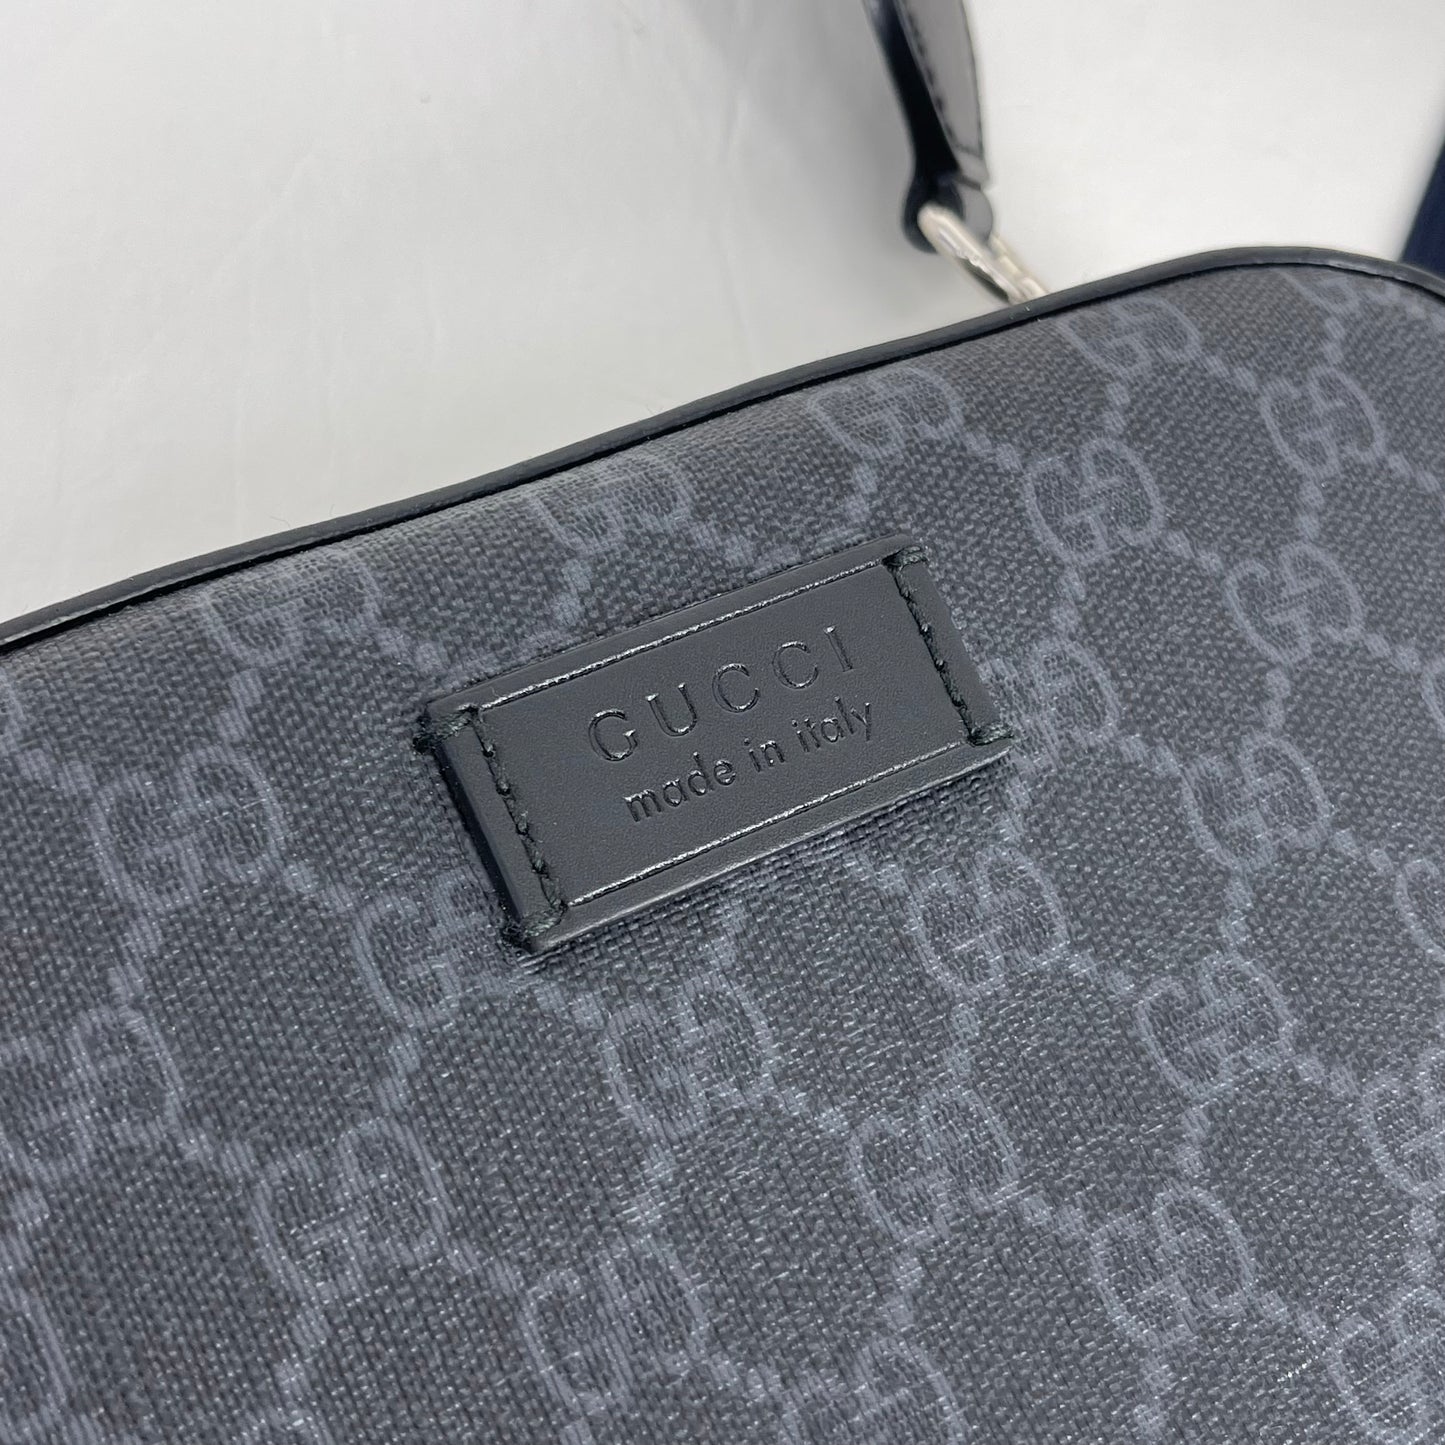 Authentic Gucci Black Interlocking GG Shoulder Bag